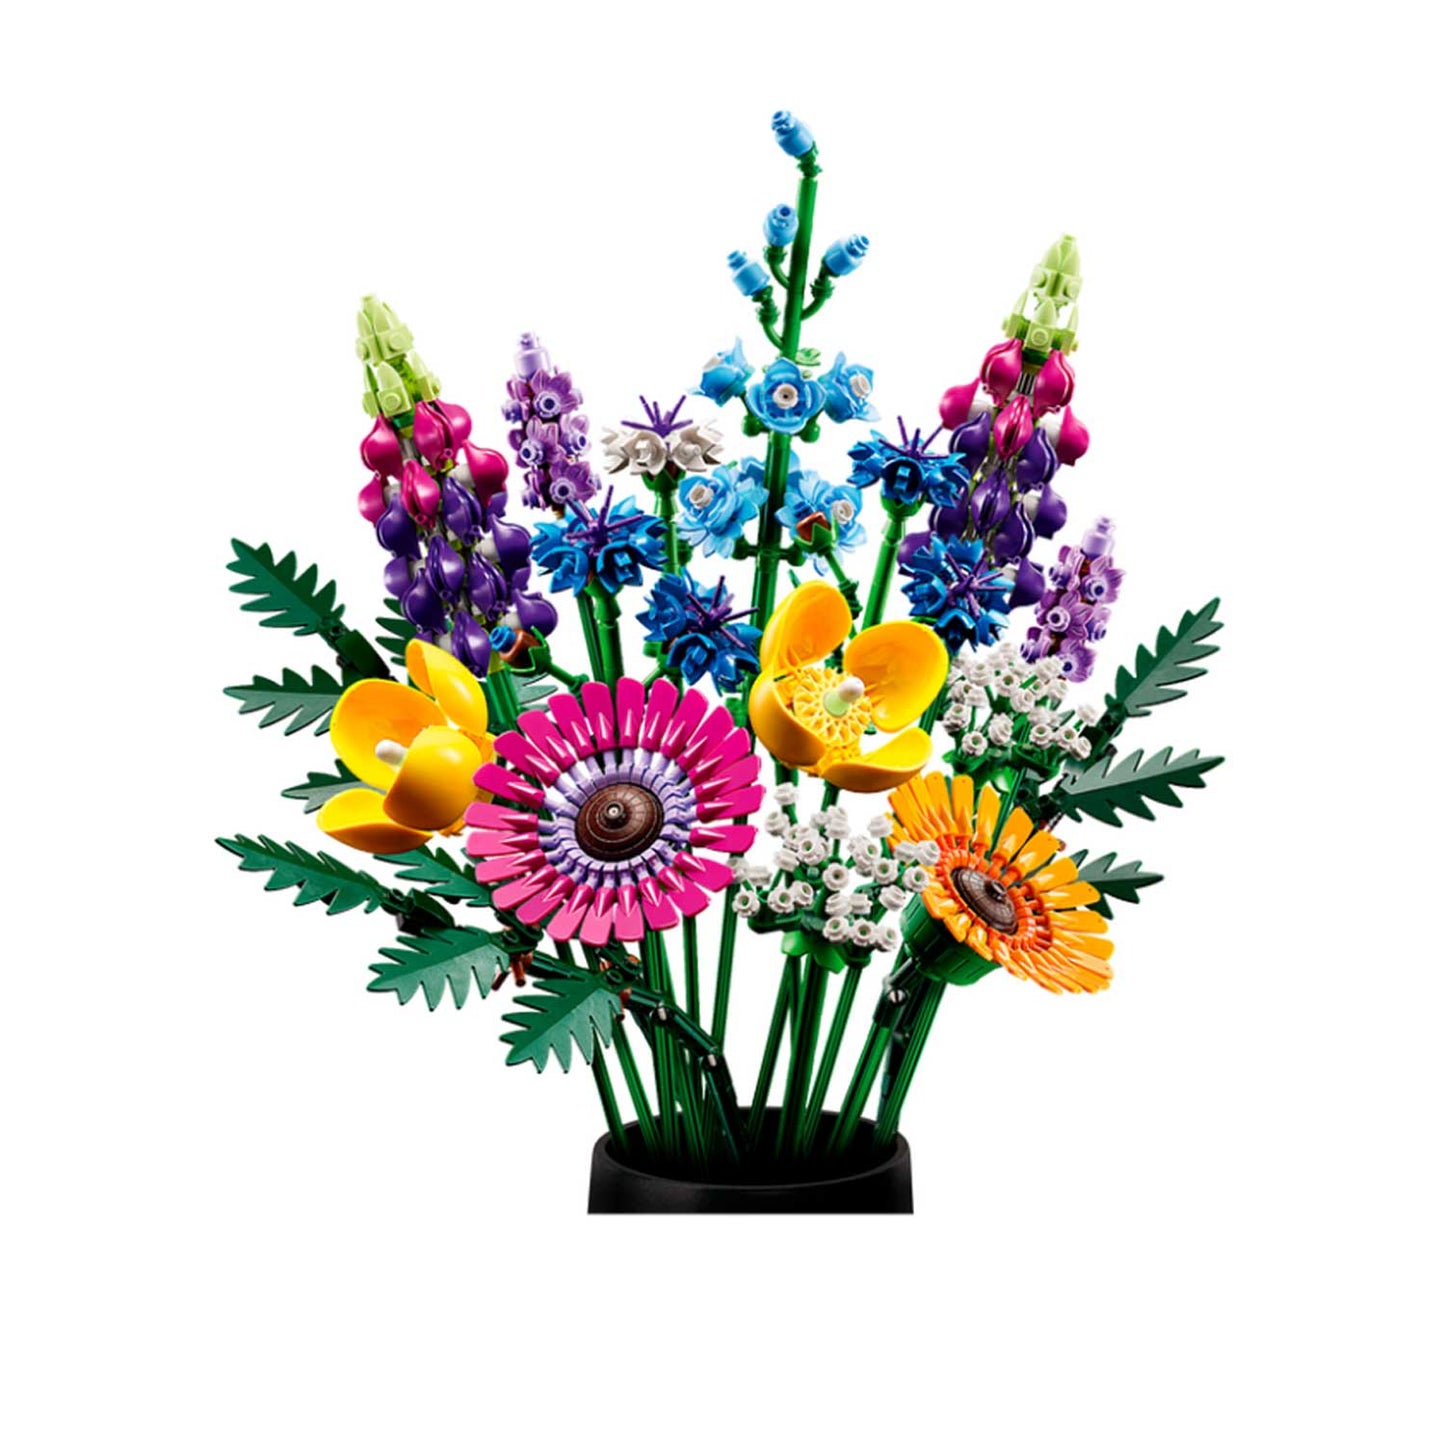 Lego - Icons Bouquet fiori selvatici 10313